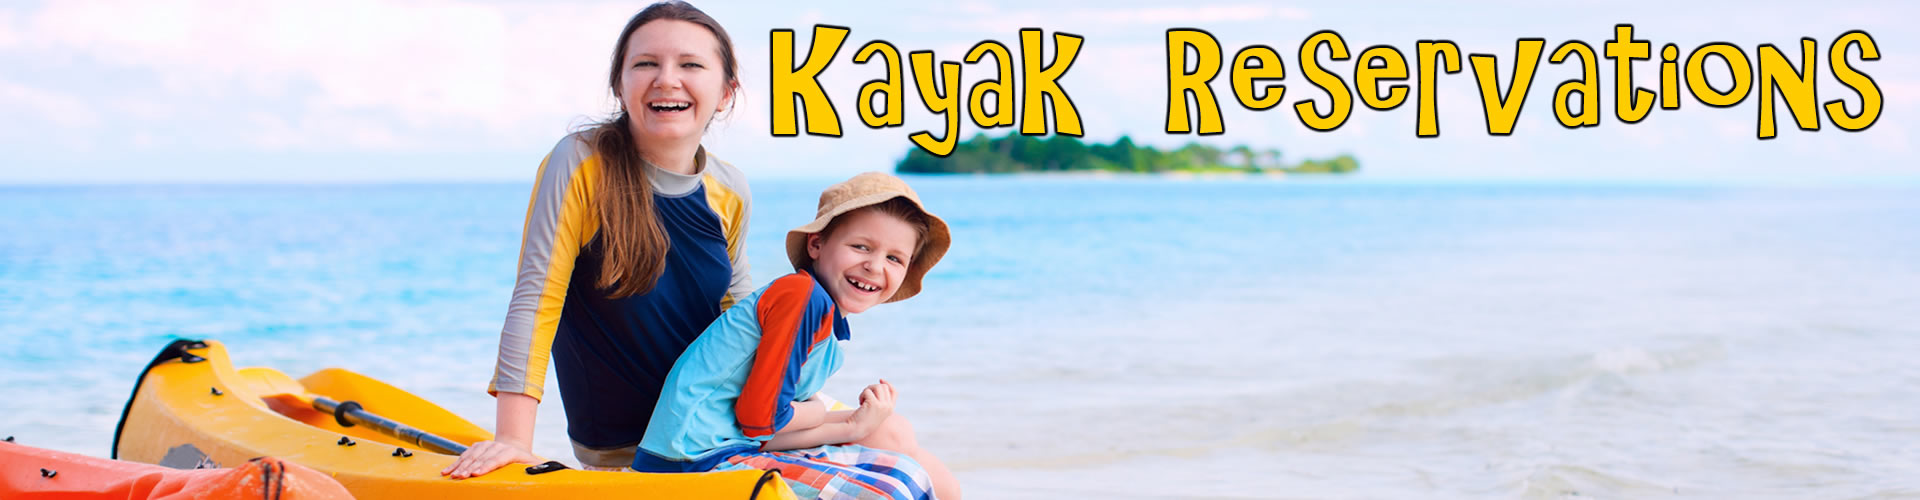 Kayak Rental Reservations, Tampa